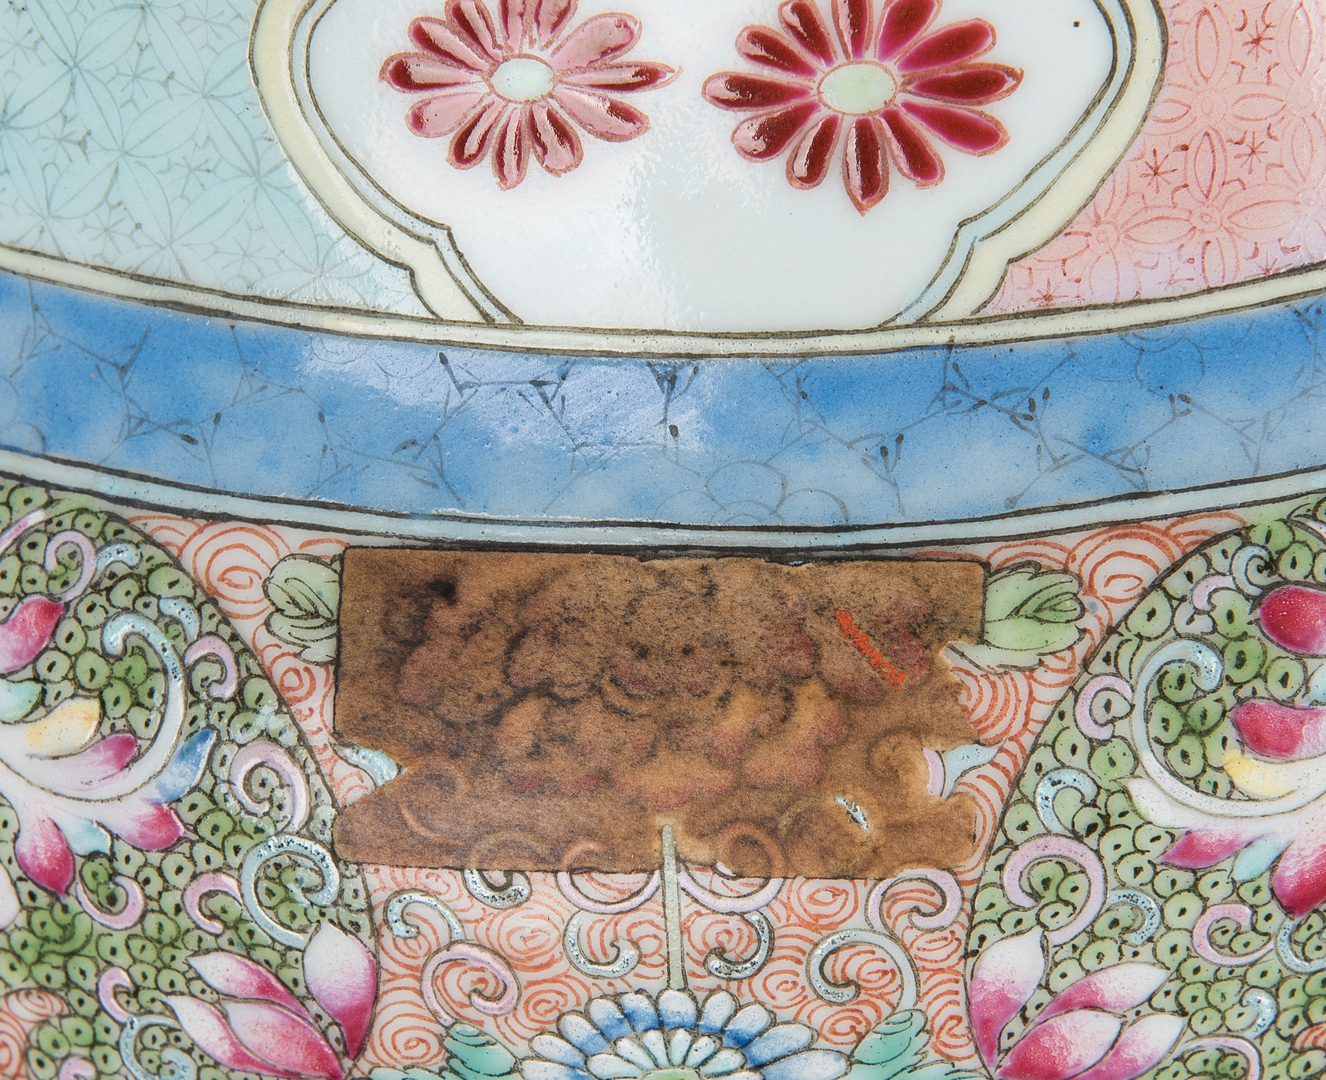 Lot 336: Chinese Porcelain Famille Rose Floor Vase